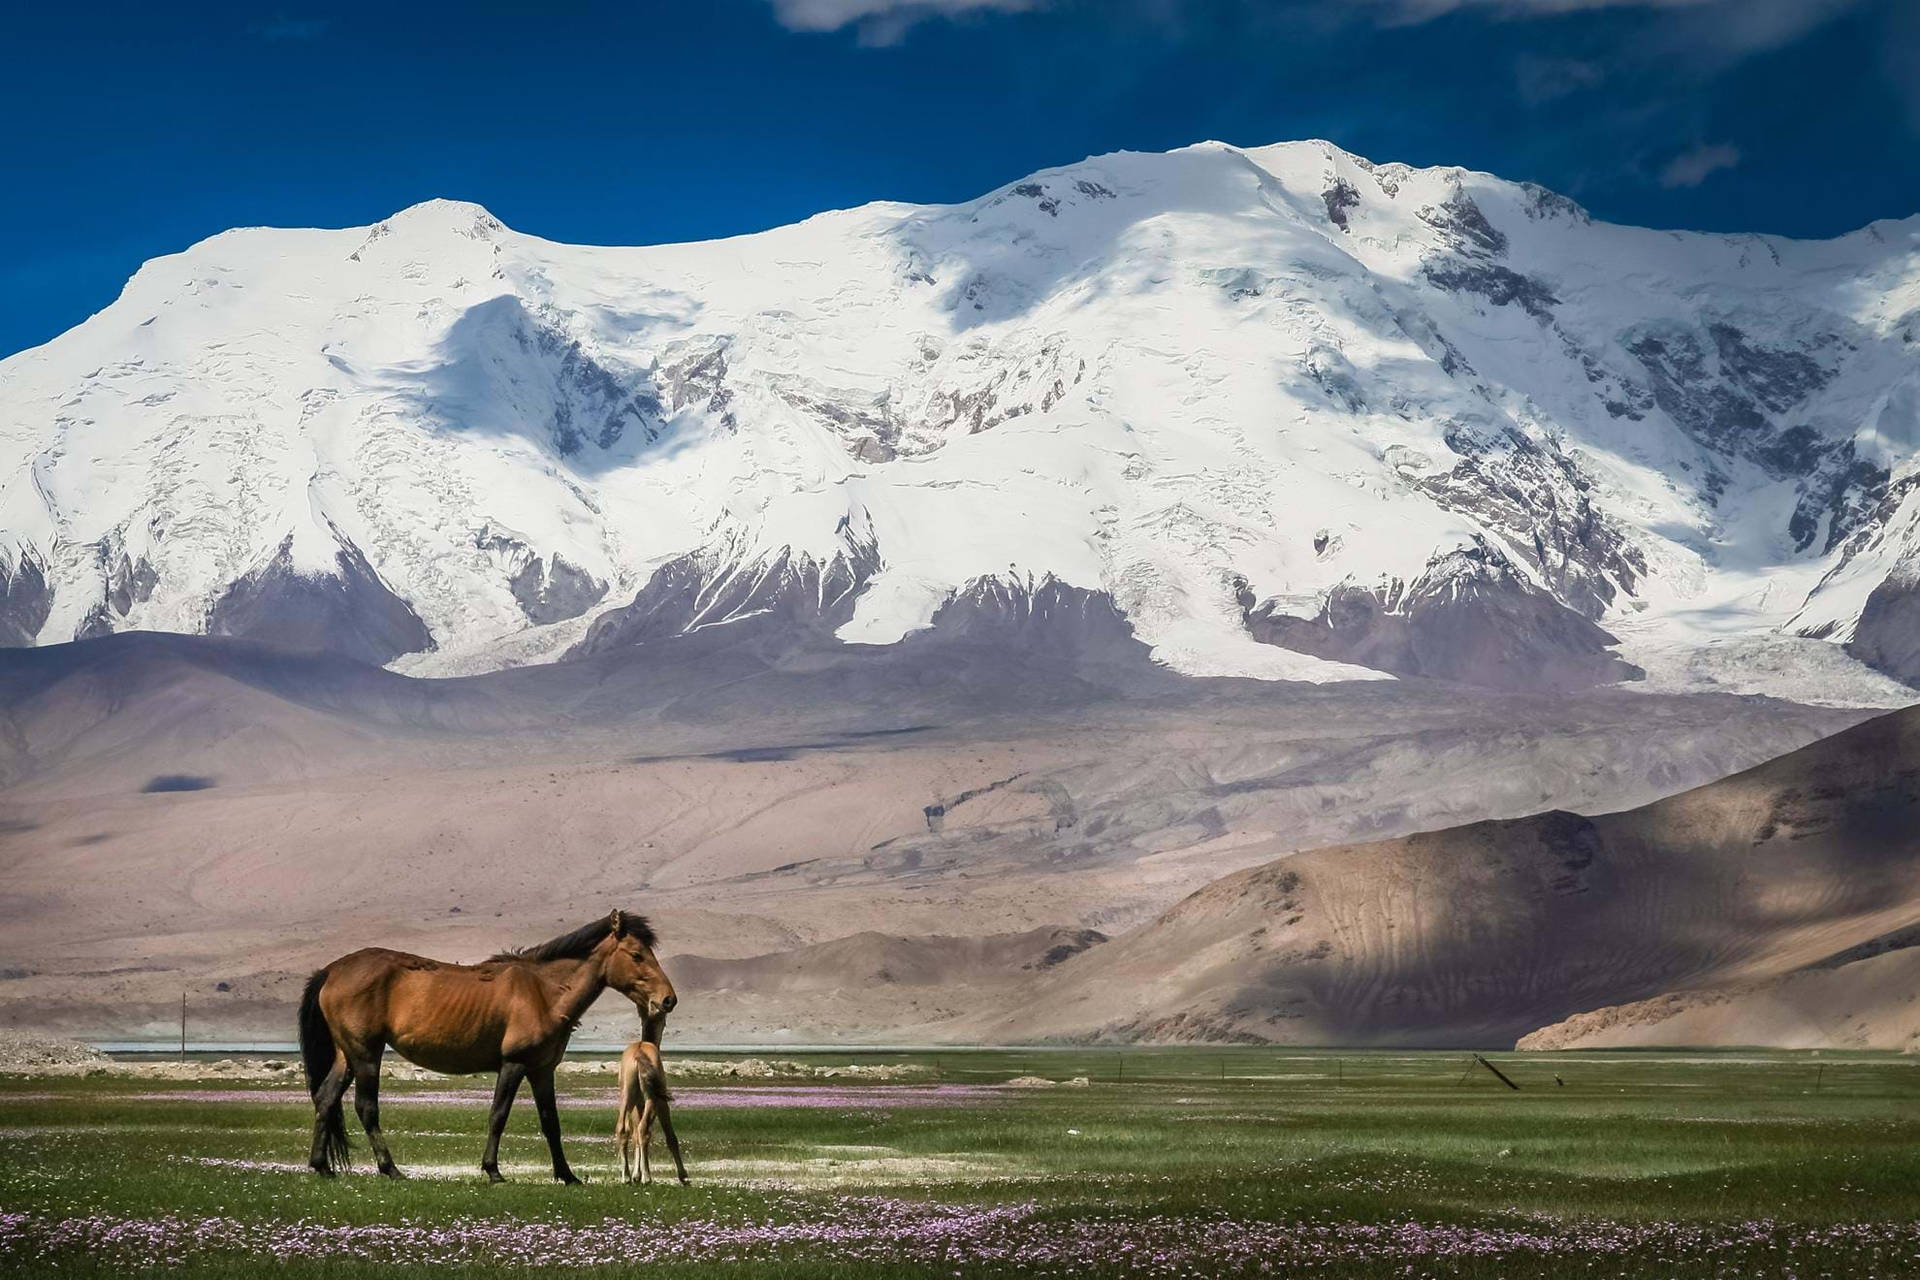 Khustain Nuruu Mongolia